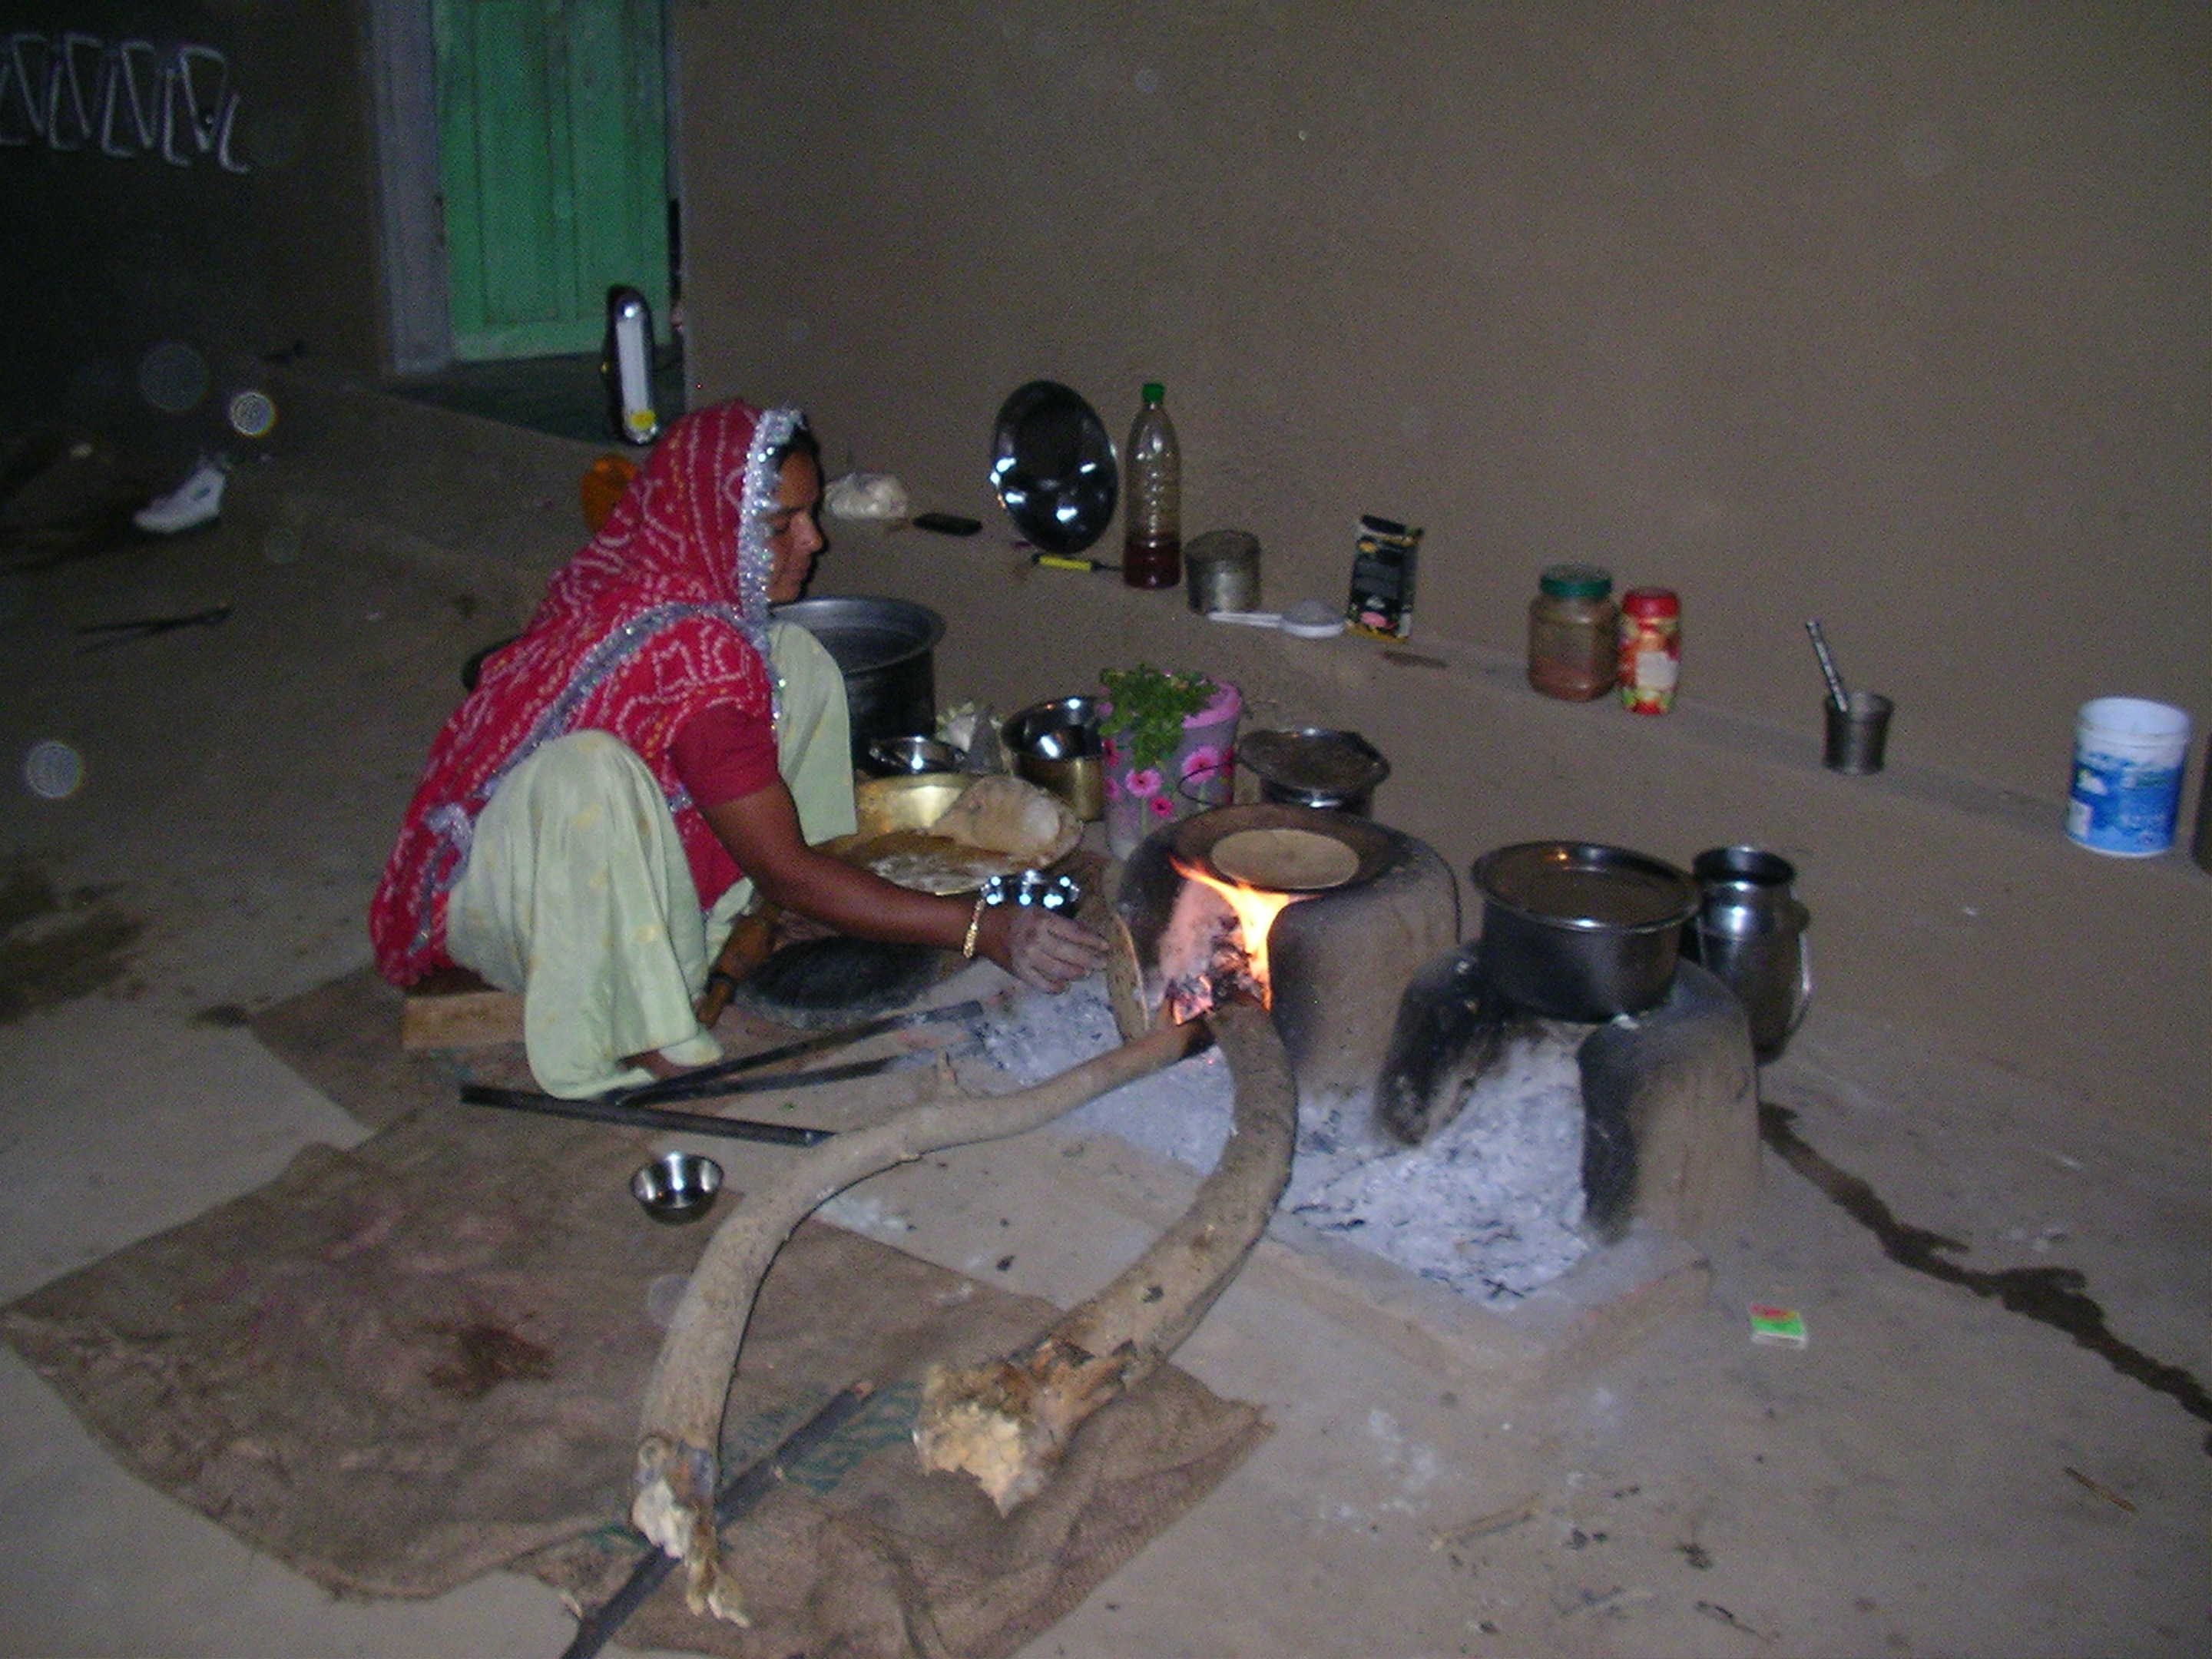 Rajasthan life, village life in India